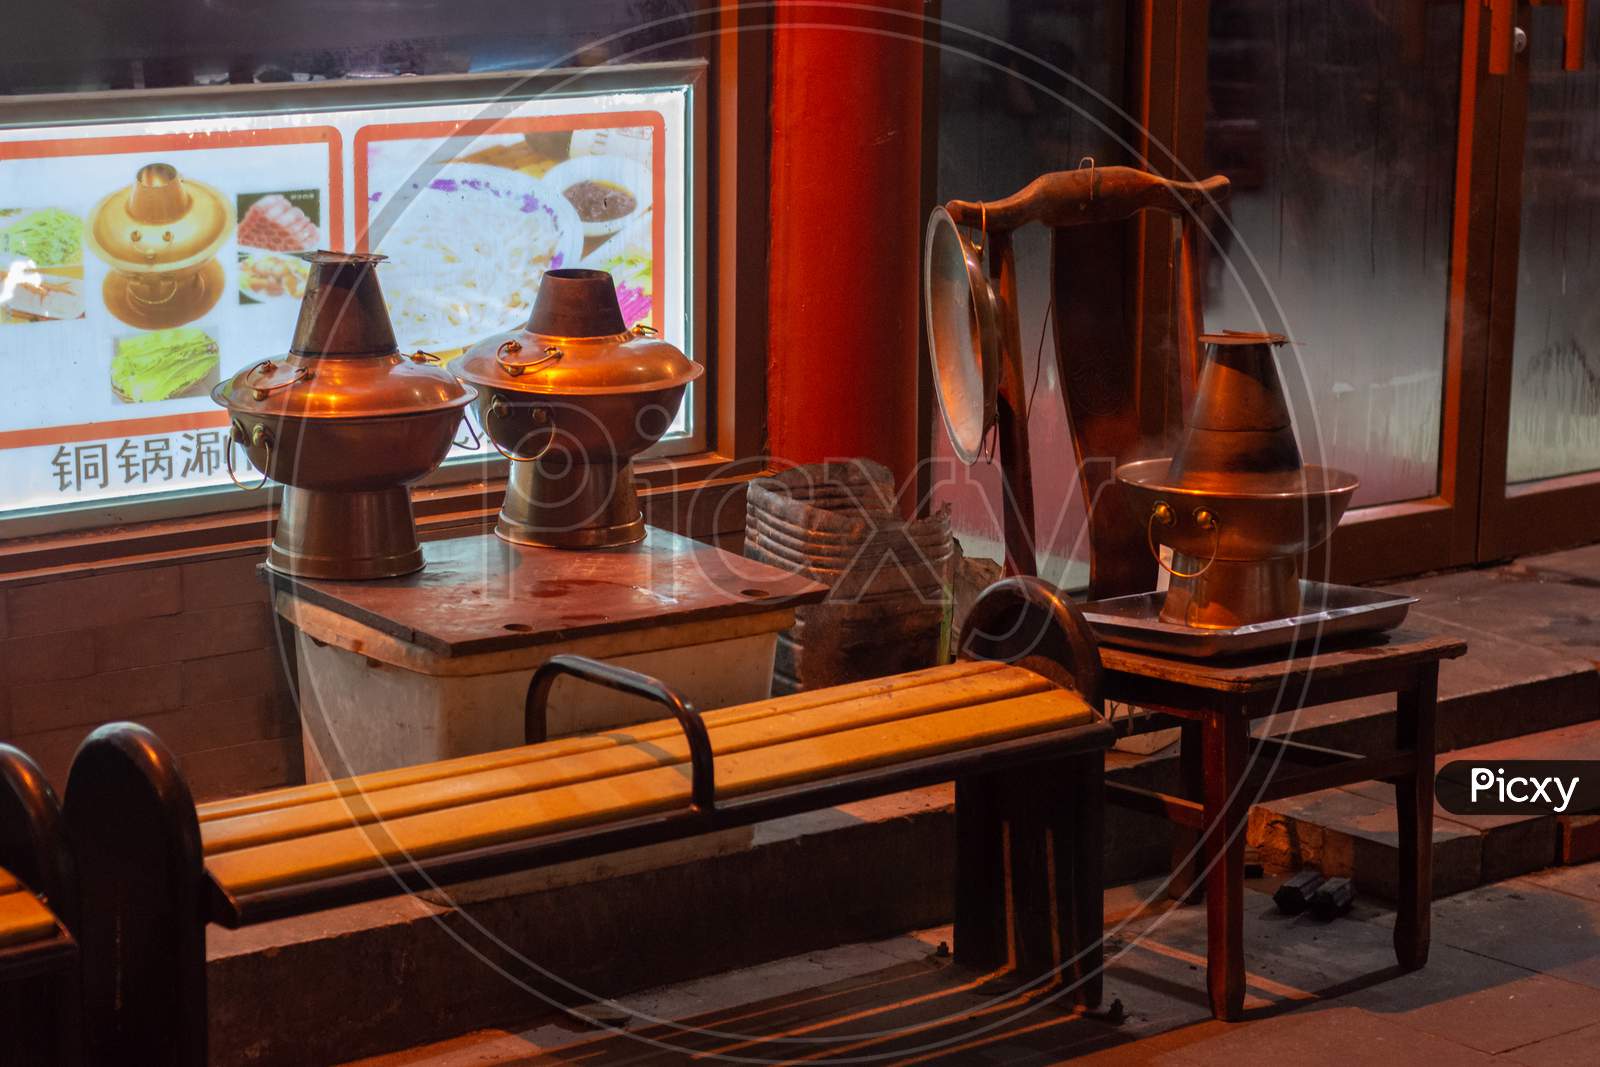 Hot Pots Cooling Off In Front Of The Restaurant In Old Qianmen Street In Beijing